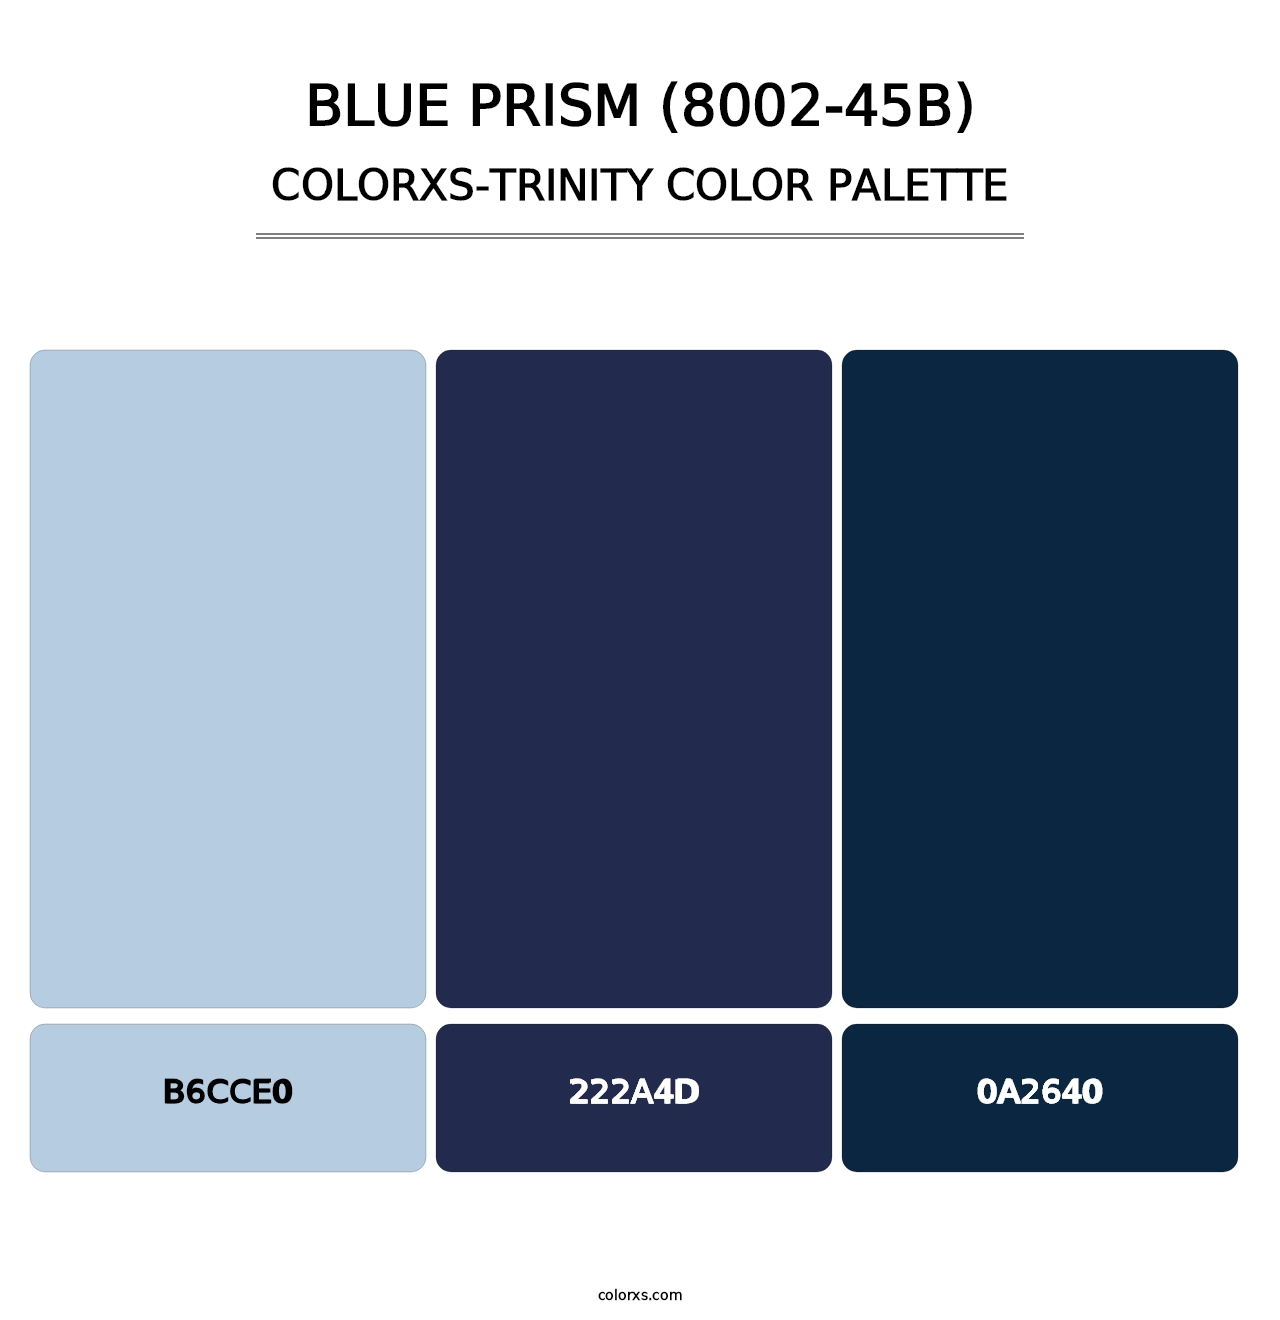 Blue Prism (8002-45B) - Colorxs Trinity Palette